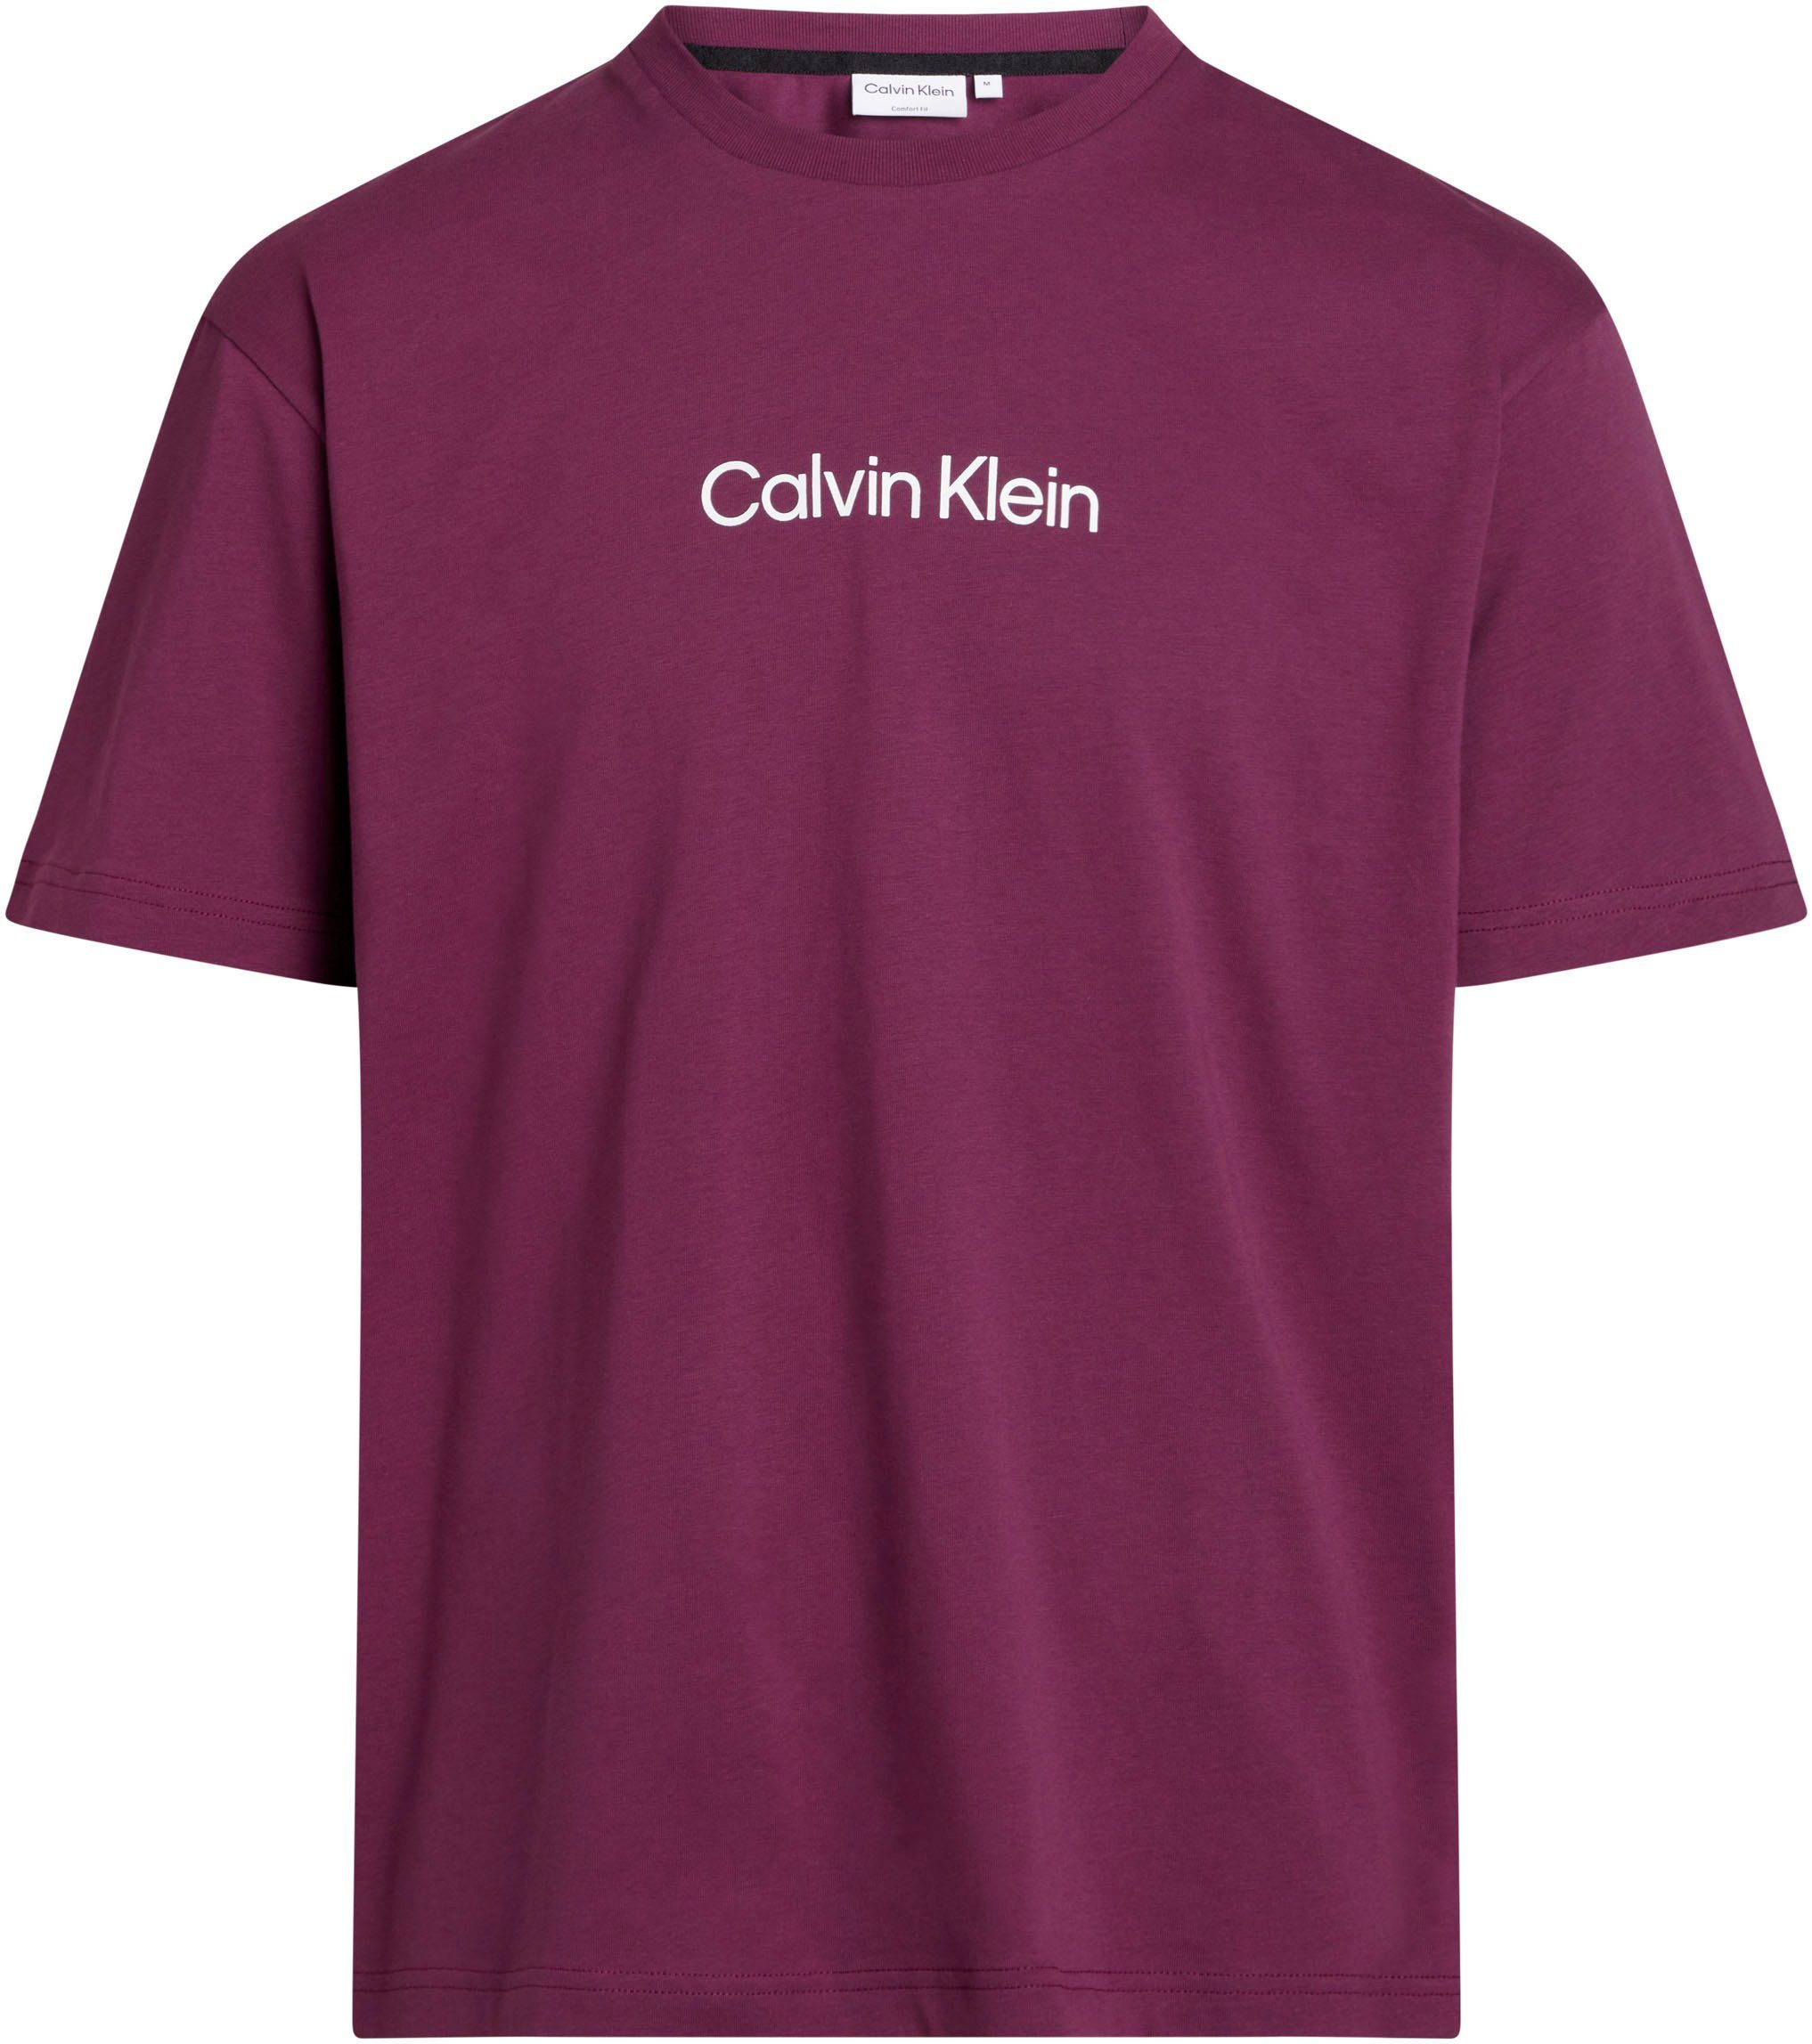 Calvin Klein LOGO Markenlabel Plum COMFORT aufgedrucktem Italian T-Shirt HERO mit T-SHIRT